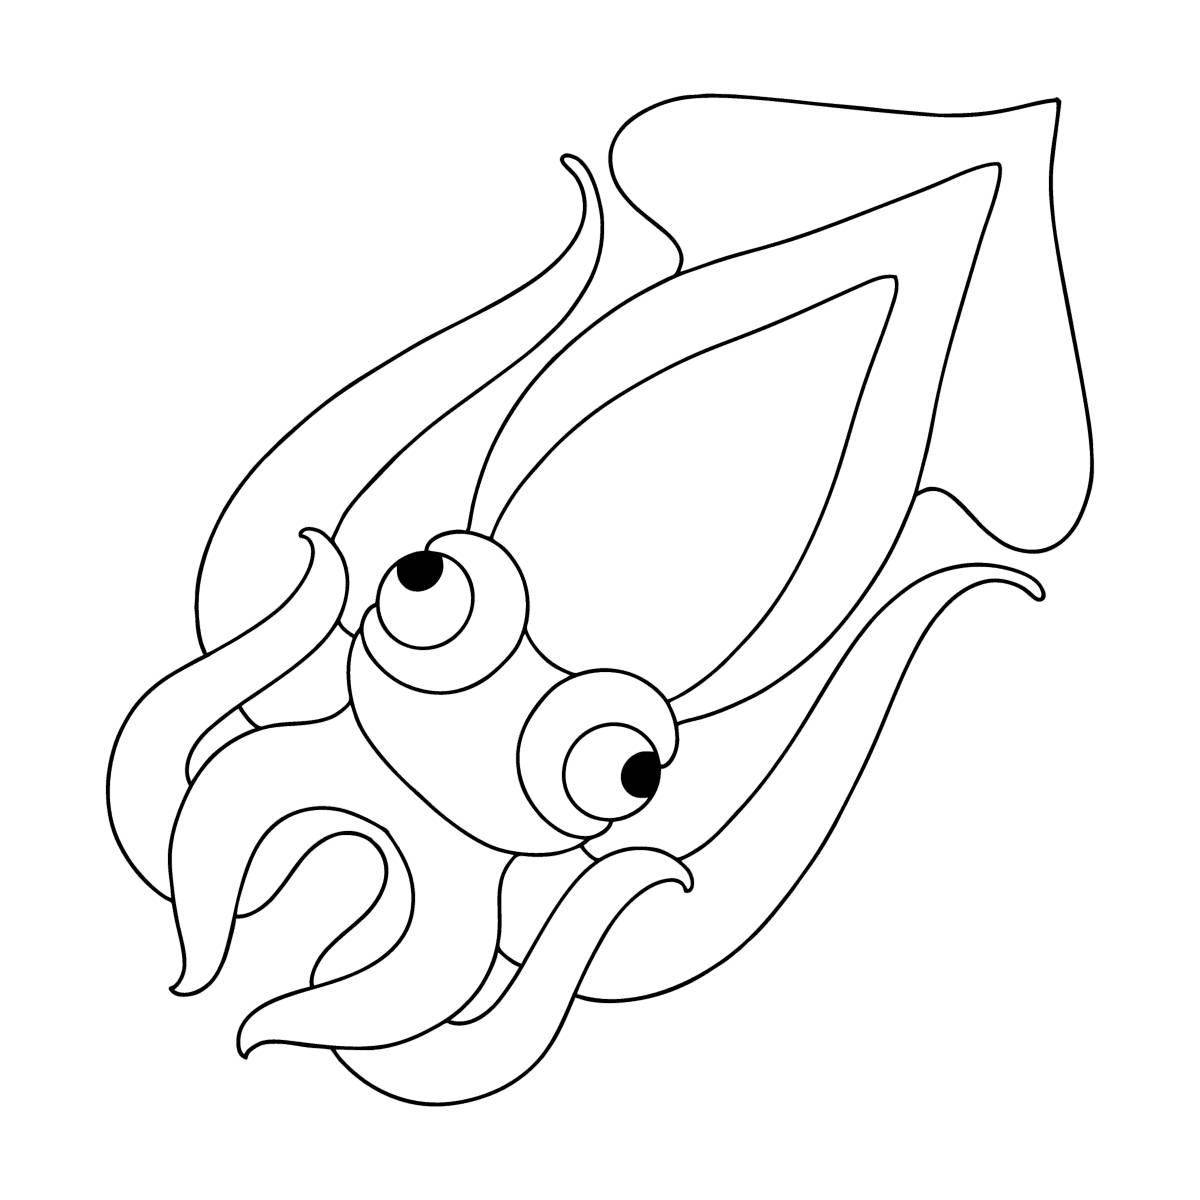 Wonderful squid coloring